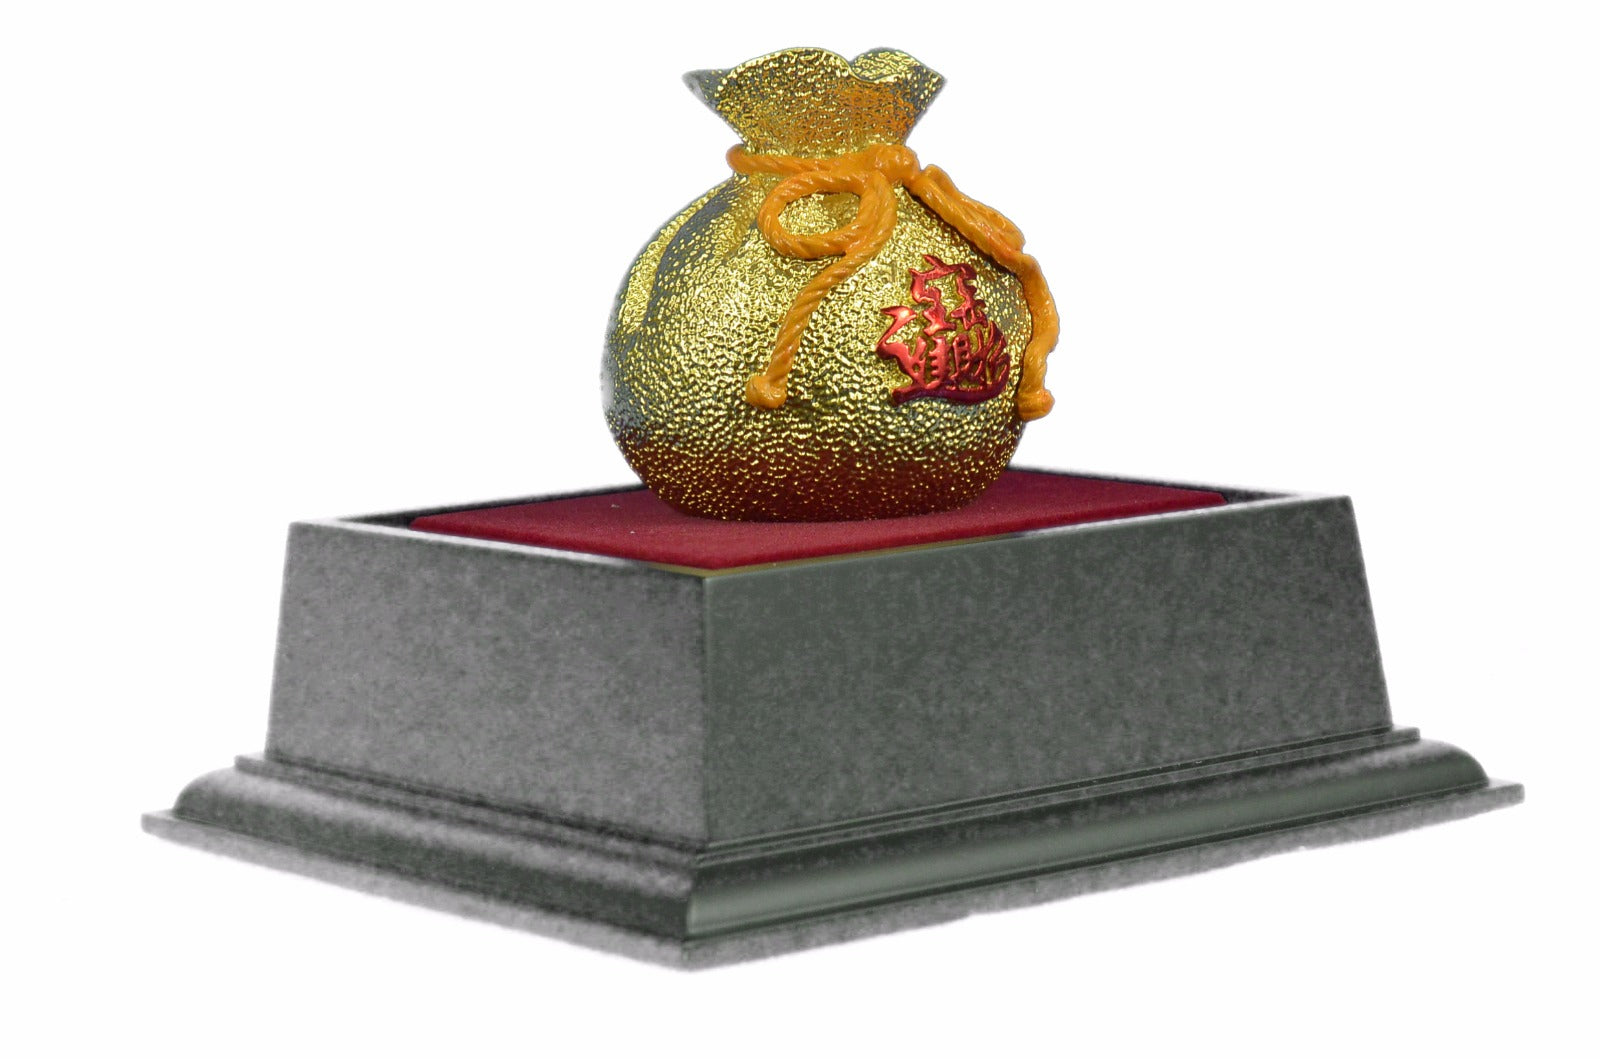 Collectible Great Gift Idea Money Bag 24K Gold Bronze Sculpture Figurine Hotcast